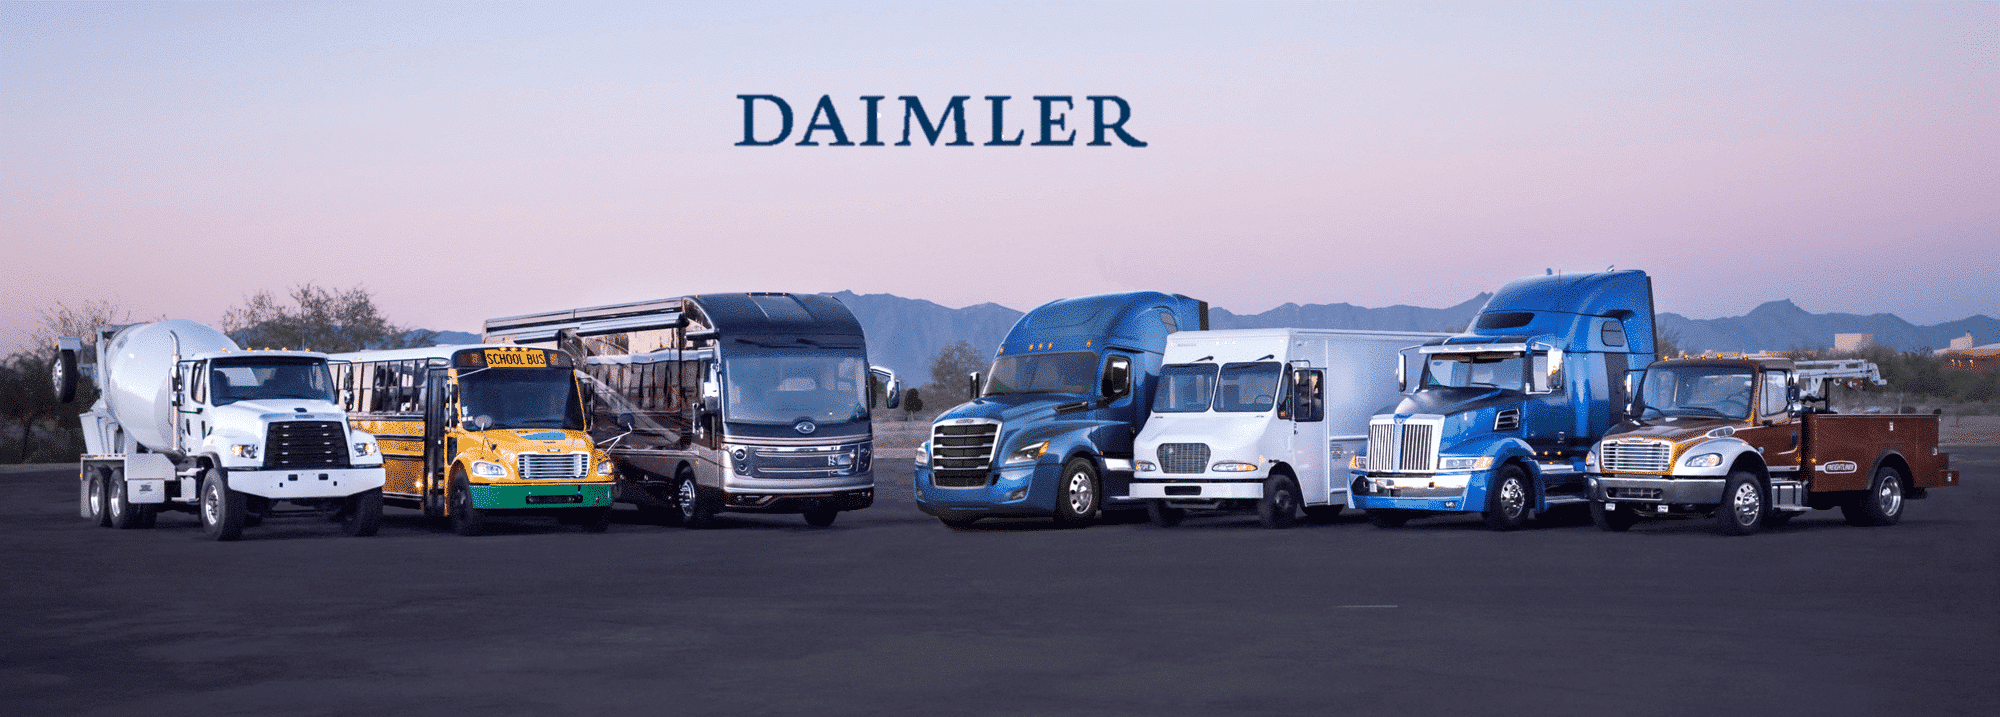 Daimler-trucks-north-america-2019-logo